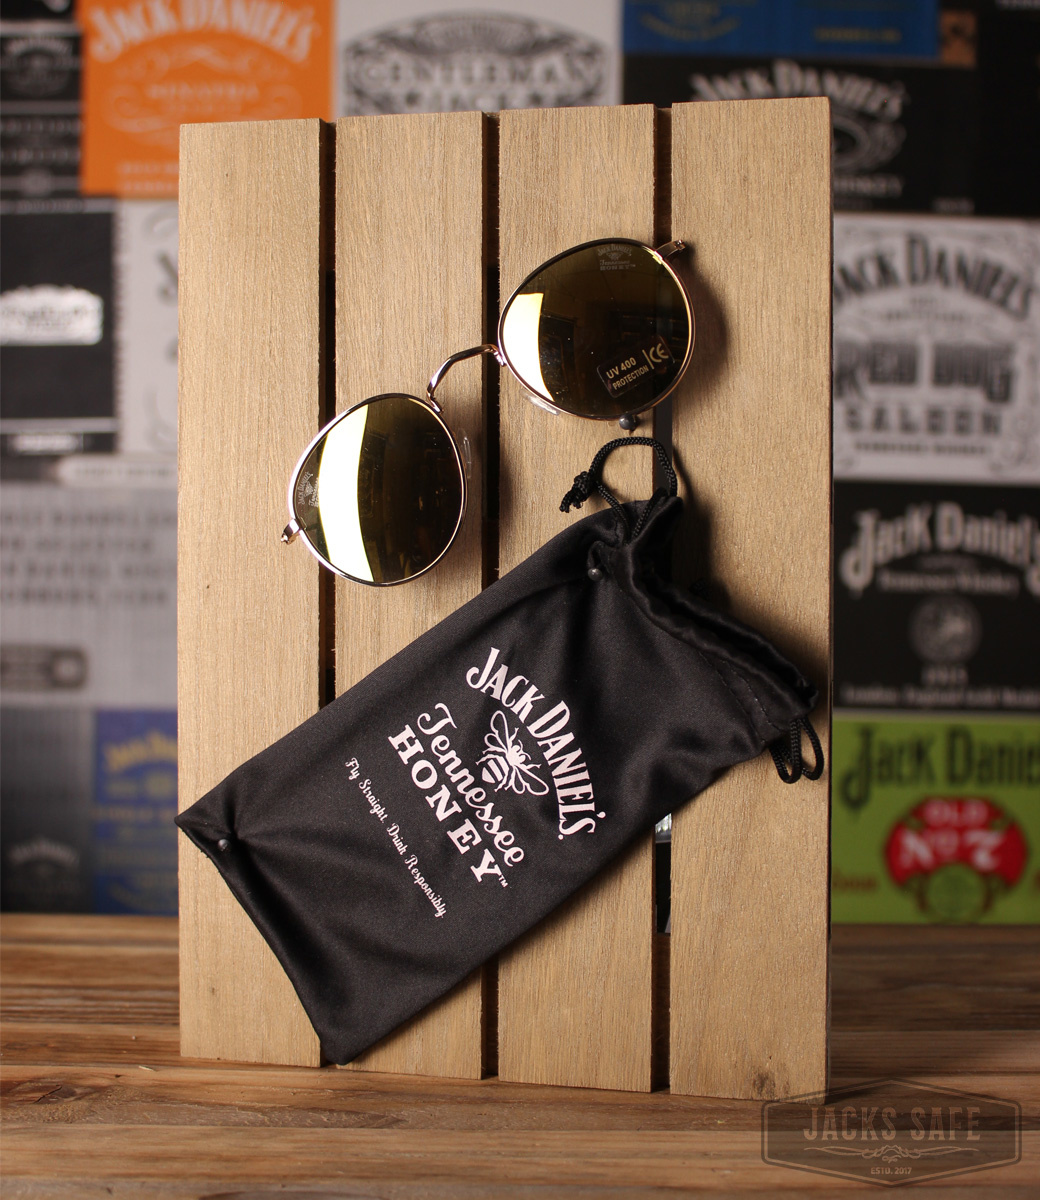 JACK DANIEL'S - Honey Sunglasses - Metal frame - in bag